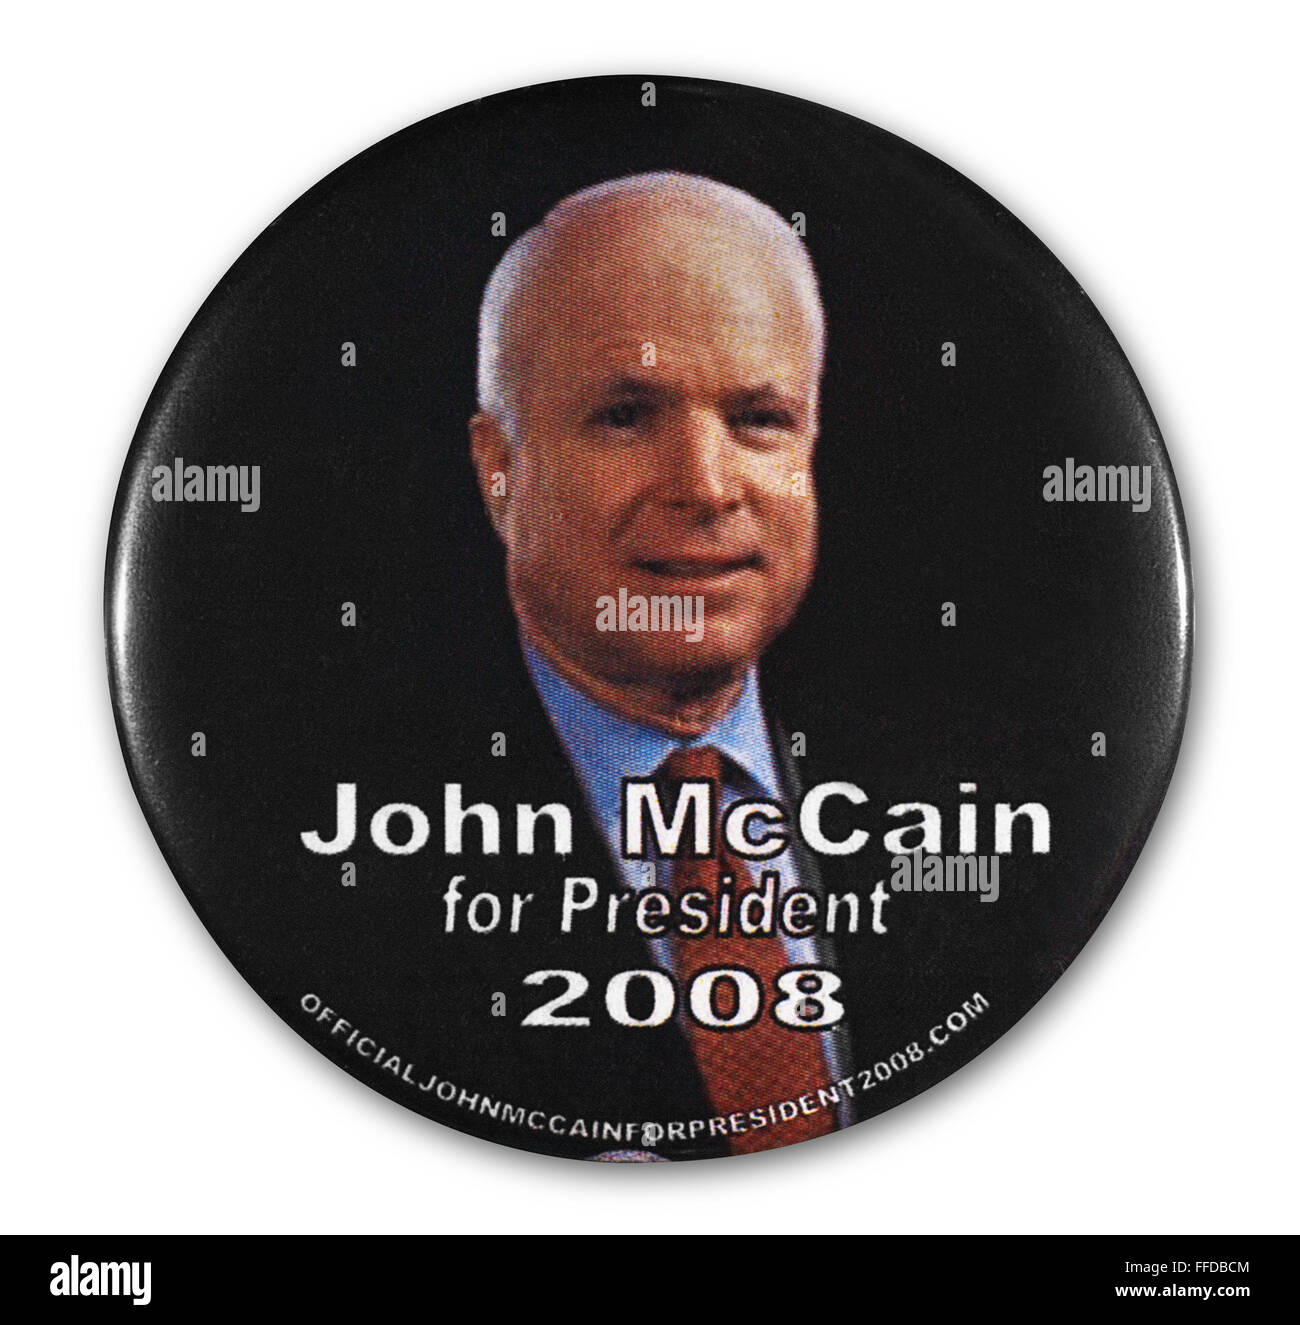 PRÄSIDENTSCHAFTSWAHLKAMPF 2008. /nCampaign Taste für republikanische Präsidentschaftskandidat John McCain, 2008. Stockfoto